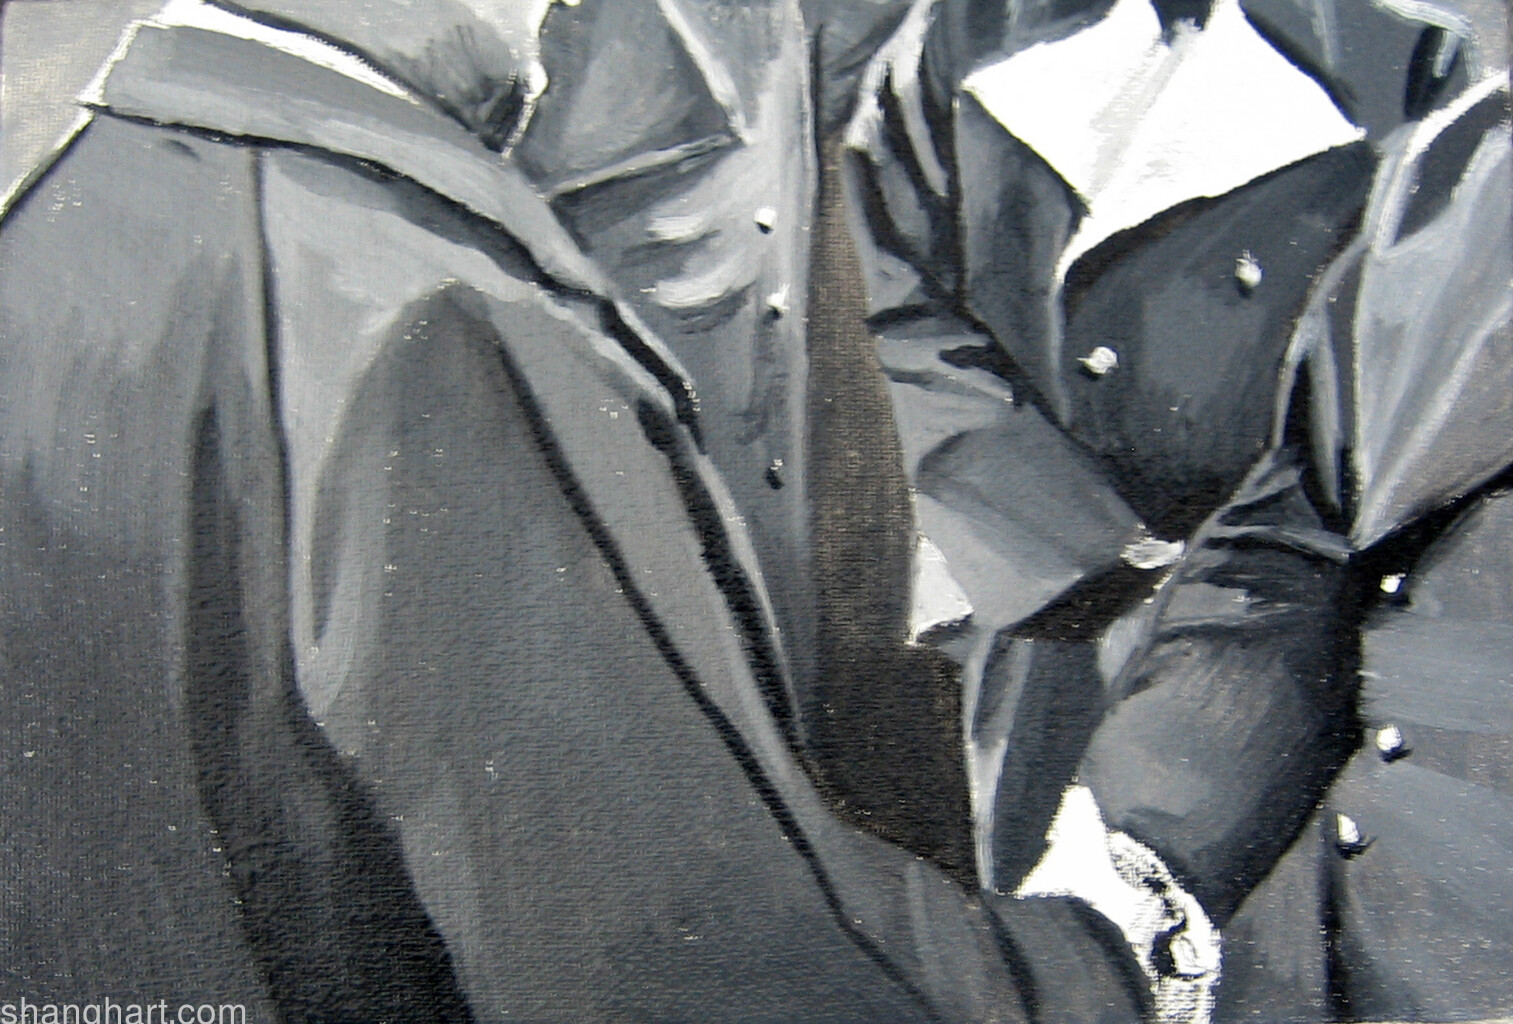 2009, 17x25cm, oil on canvas